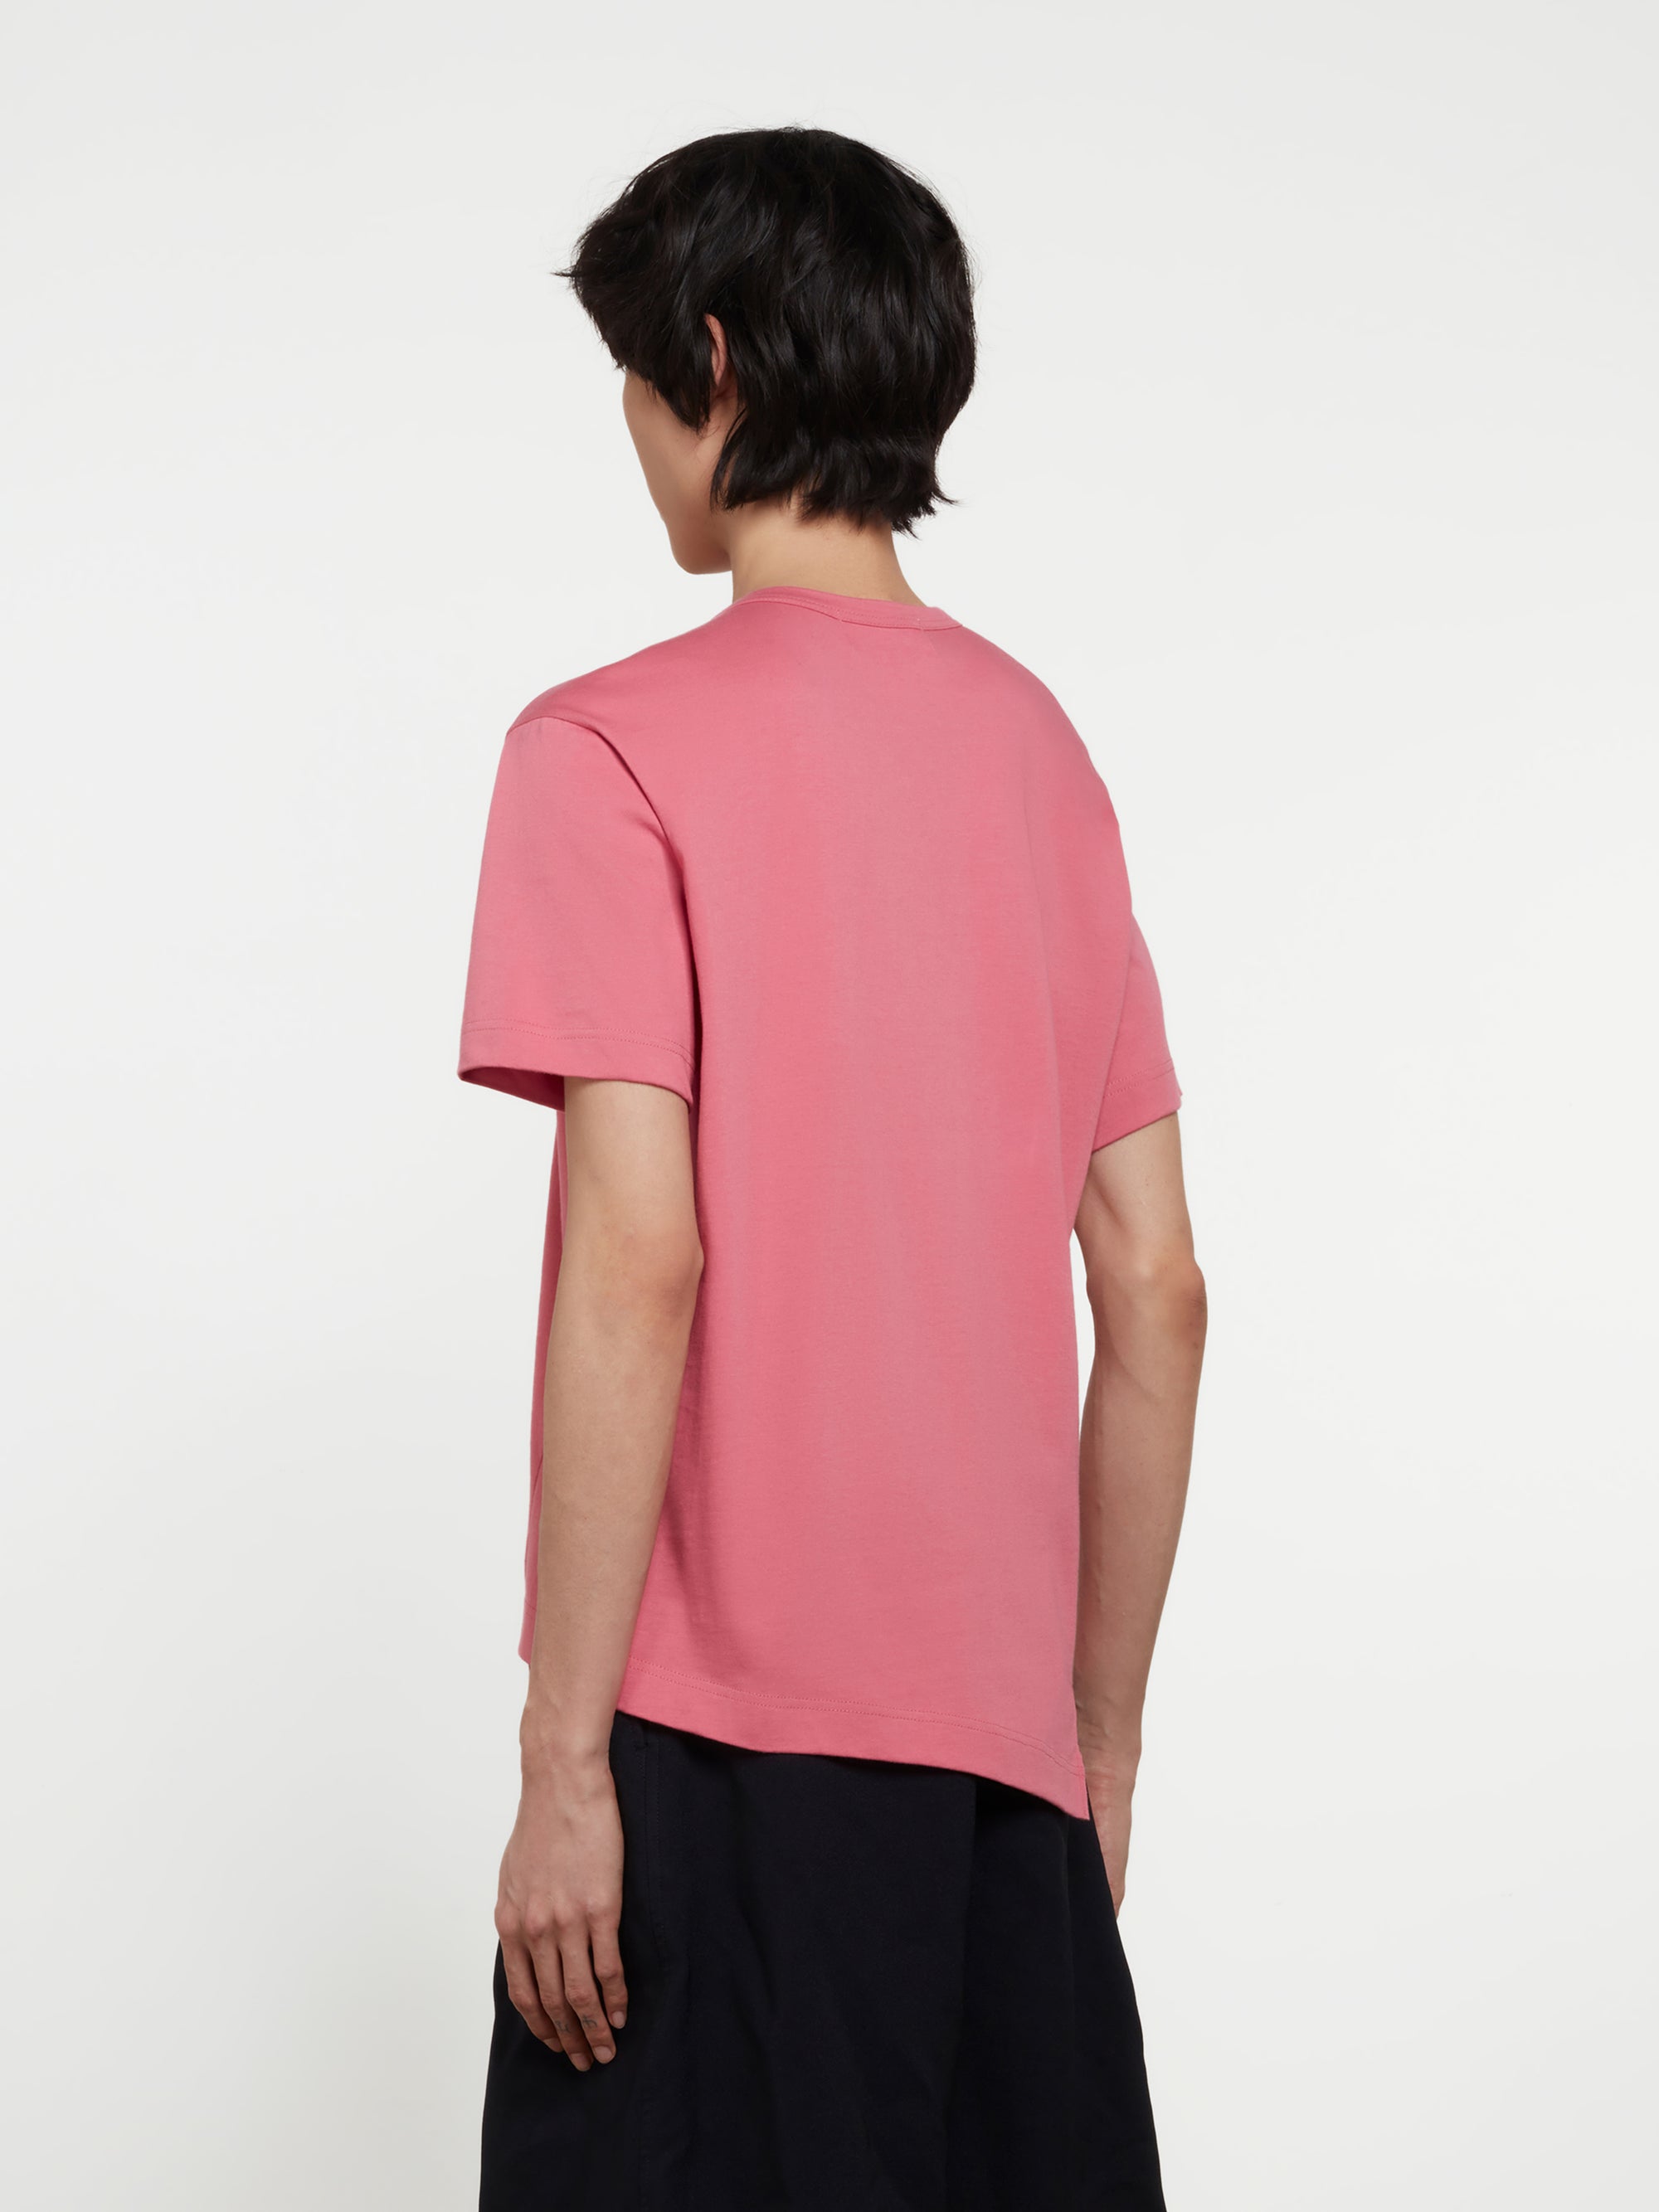 CDG Shirt - Lacoste Men’s T-Shirt - (Pink) view 3